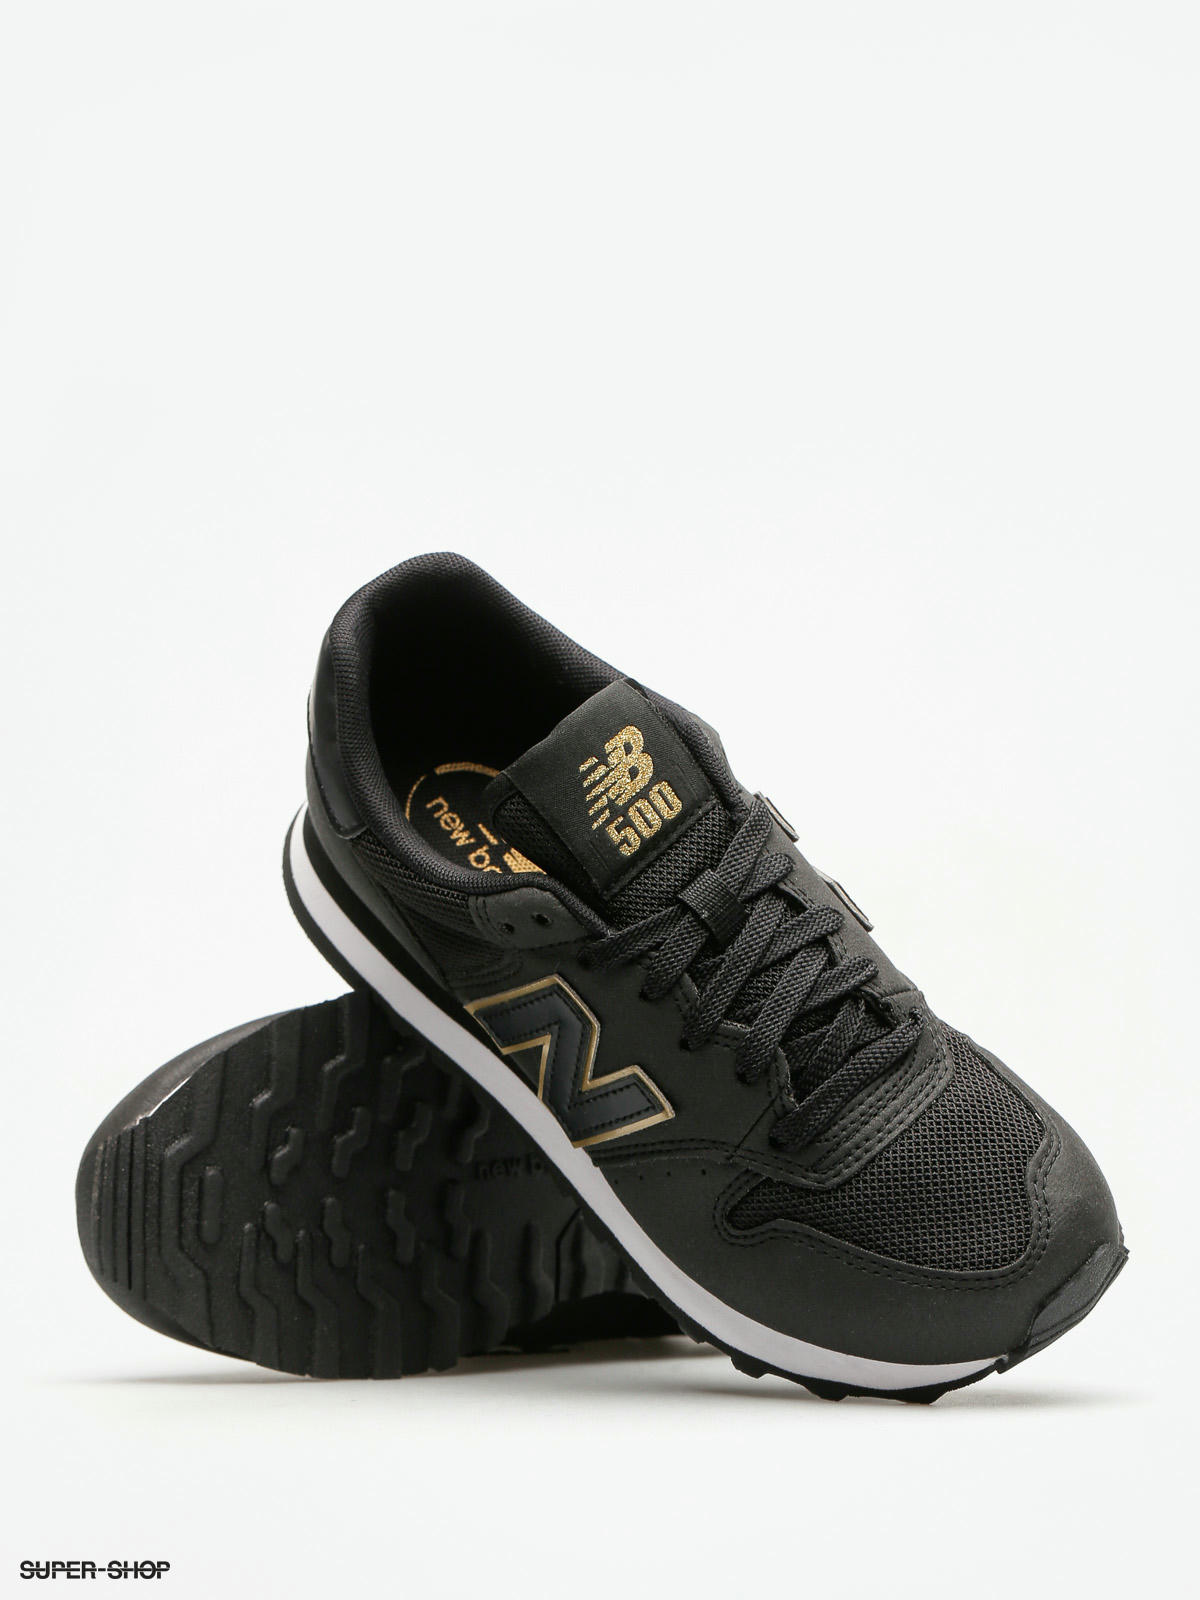 New Balance Shoes Wmn (black/gold)